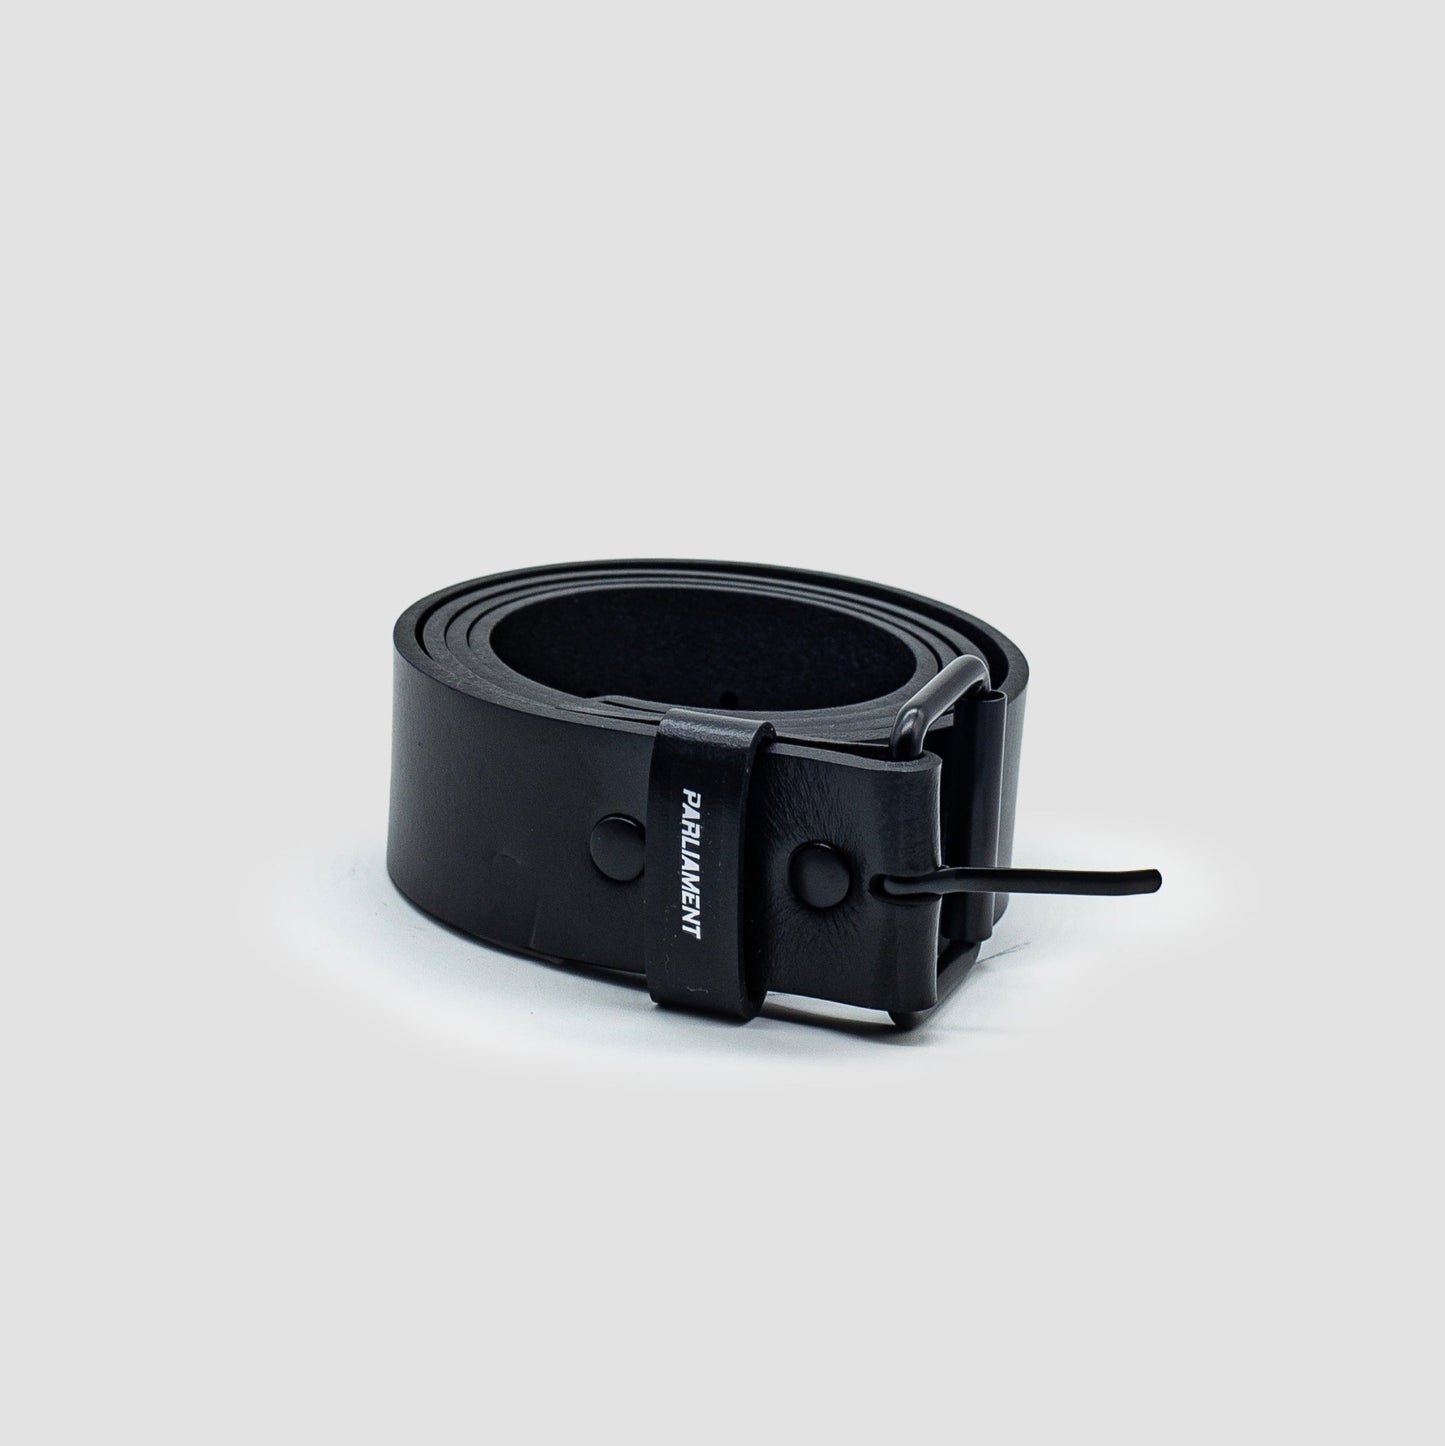 Parliament - Leather Belt (Black) - Parliamentskateshop